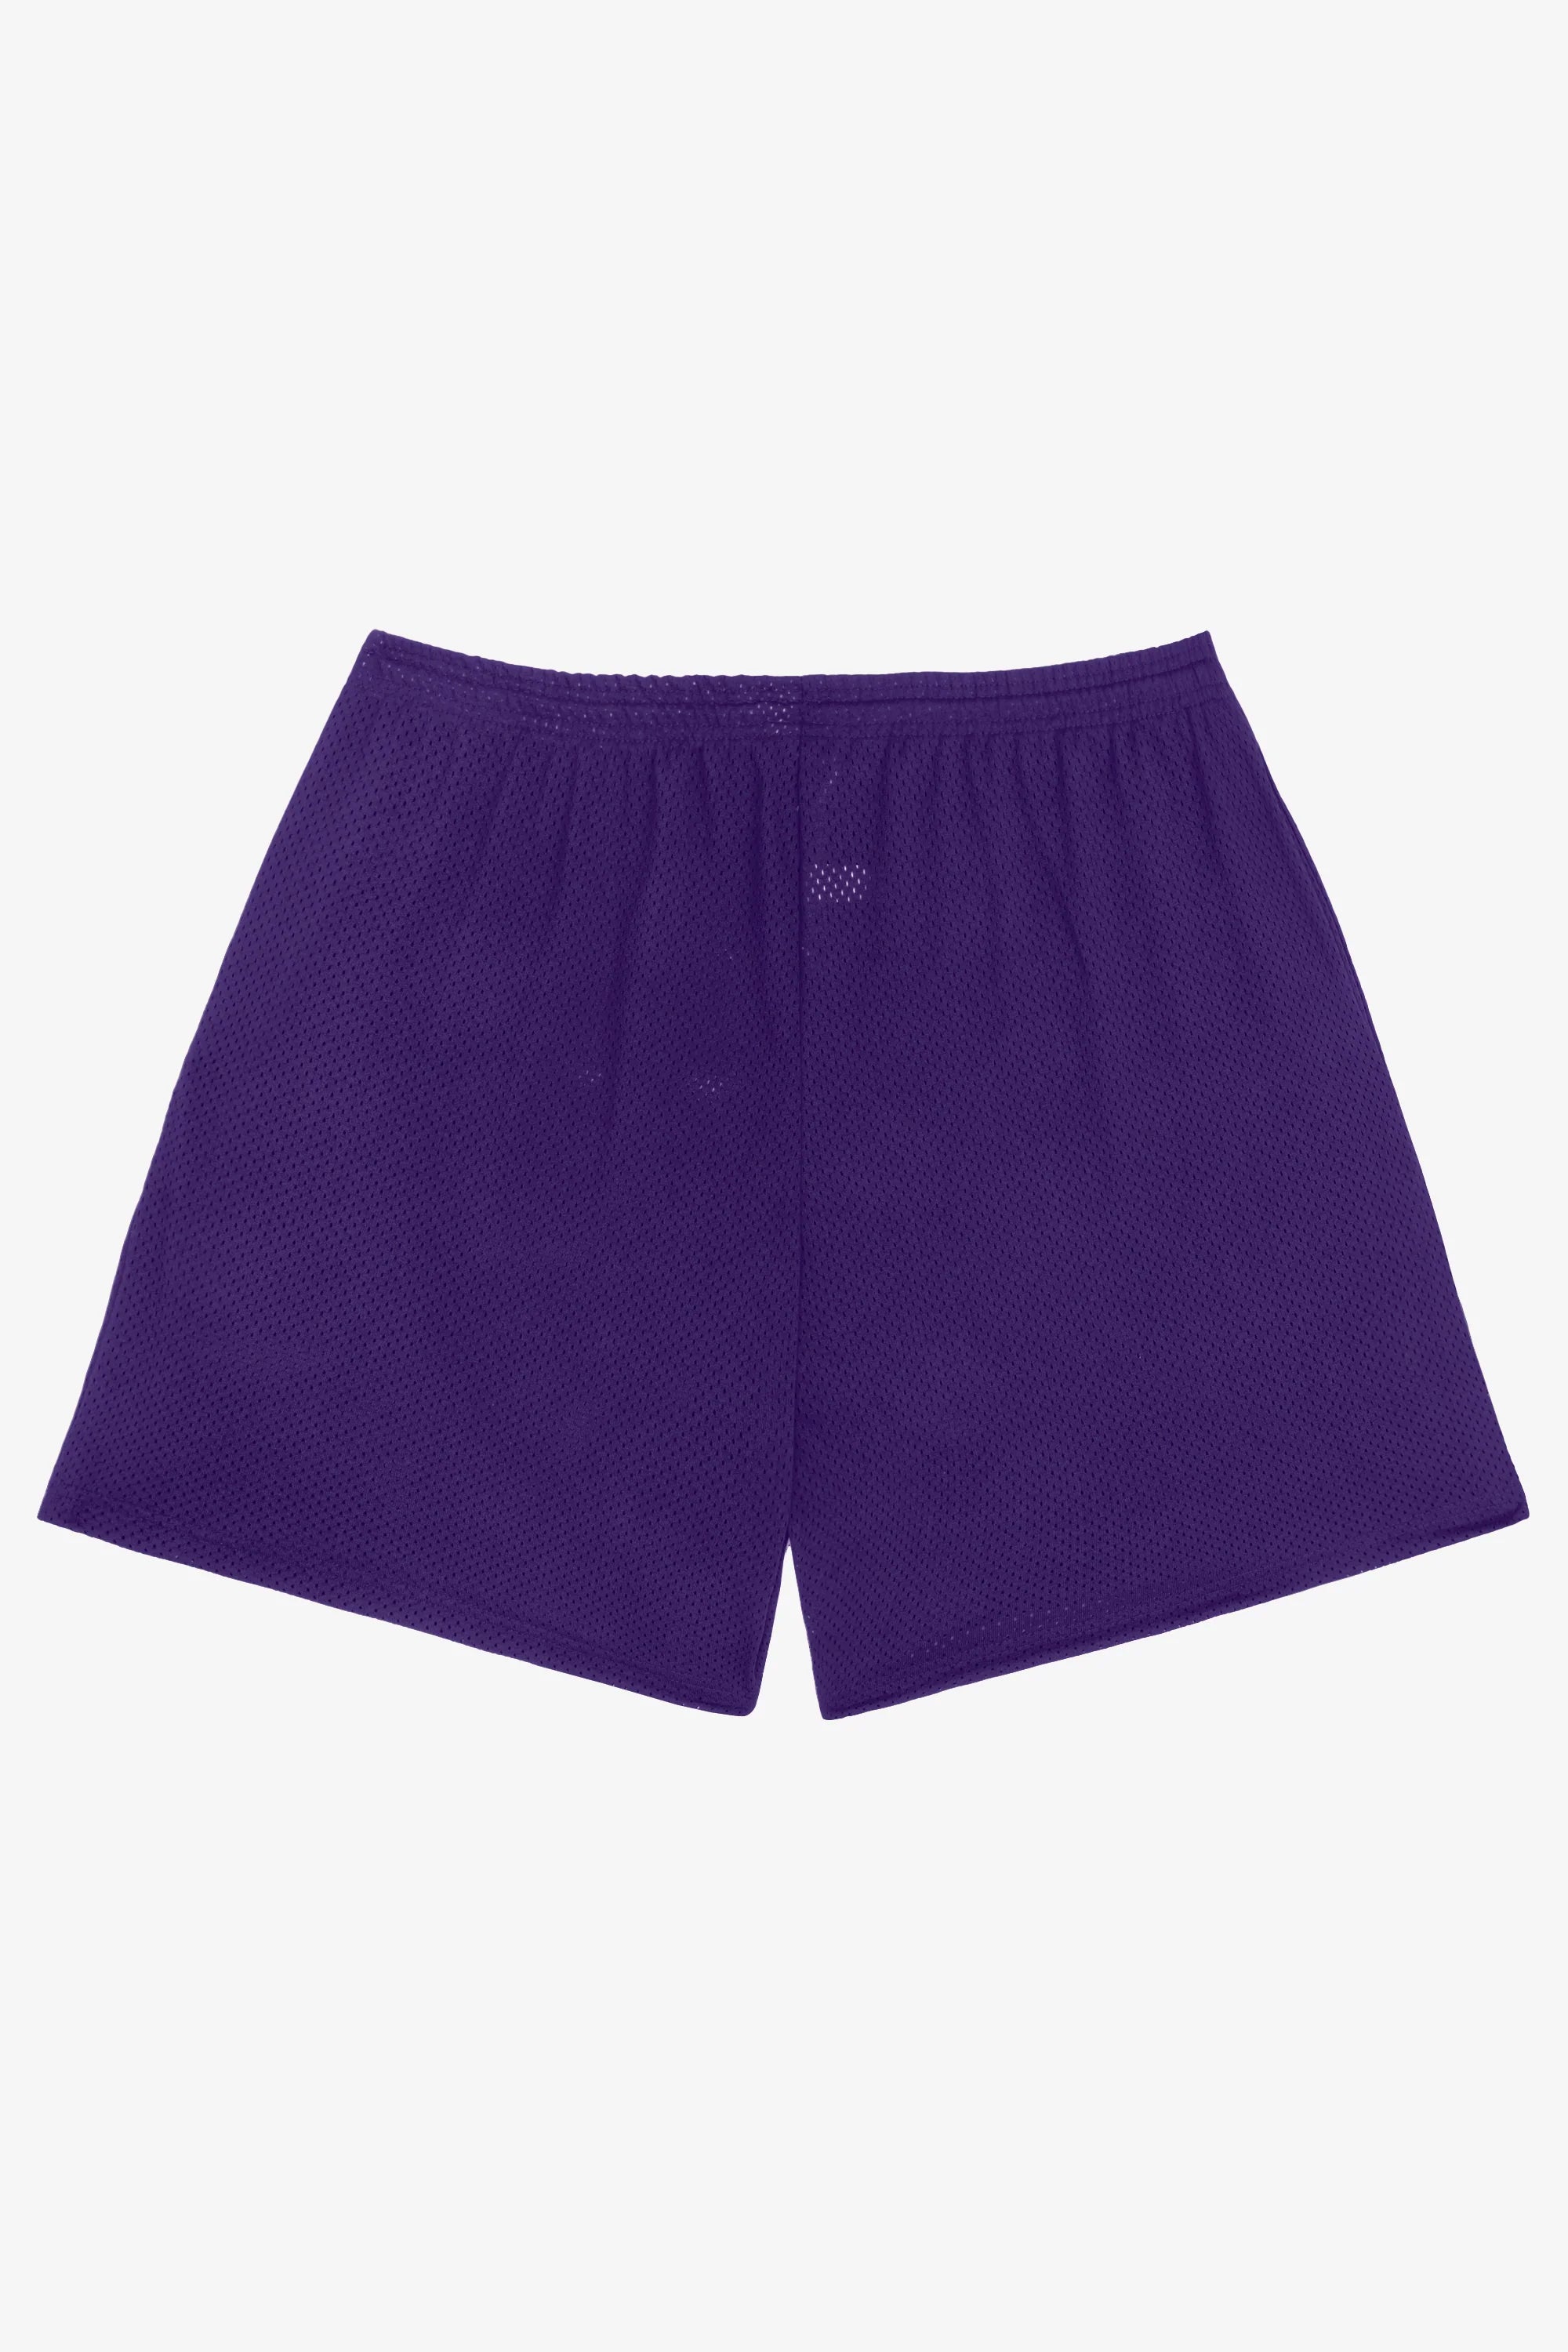 Aurola Purple Workout Shorts for Sale in San Marcos, CA - OfferUp